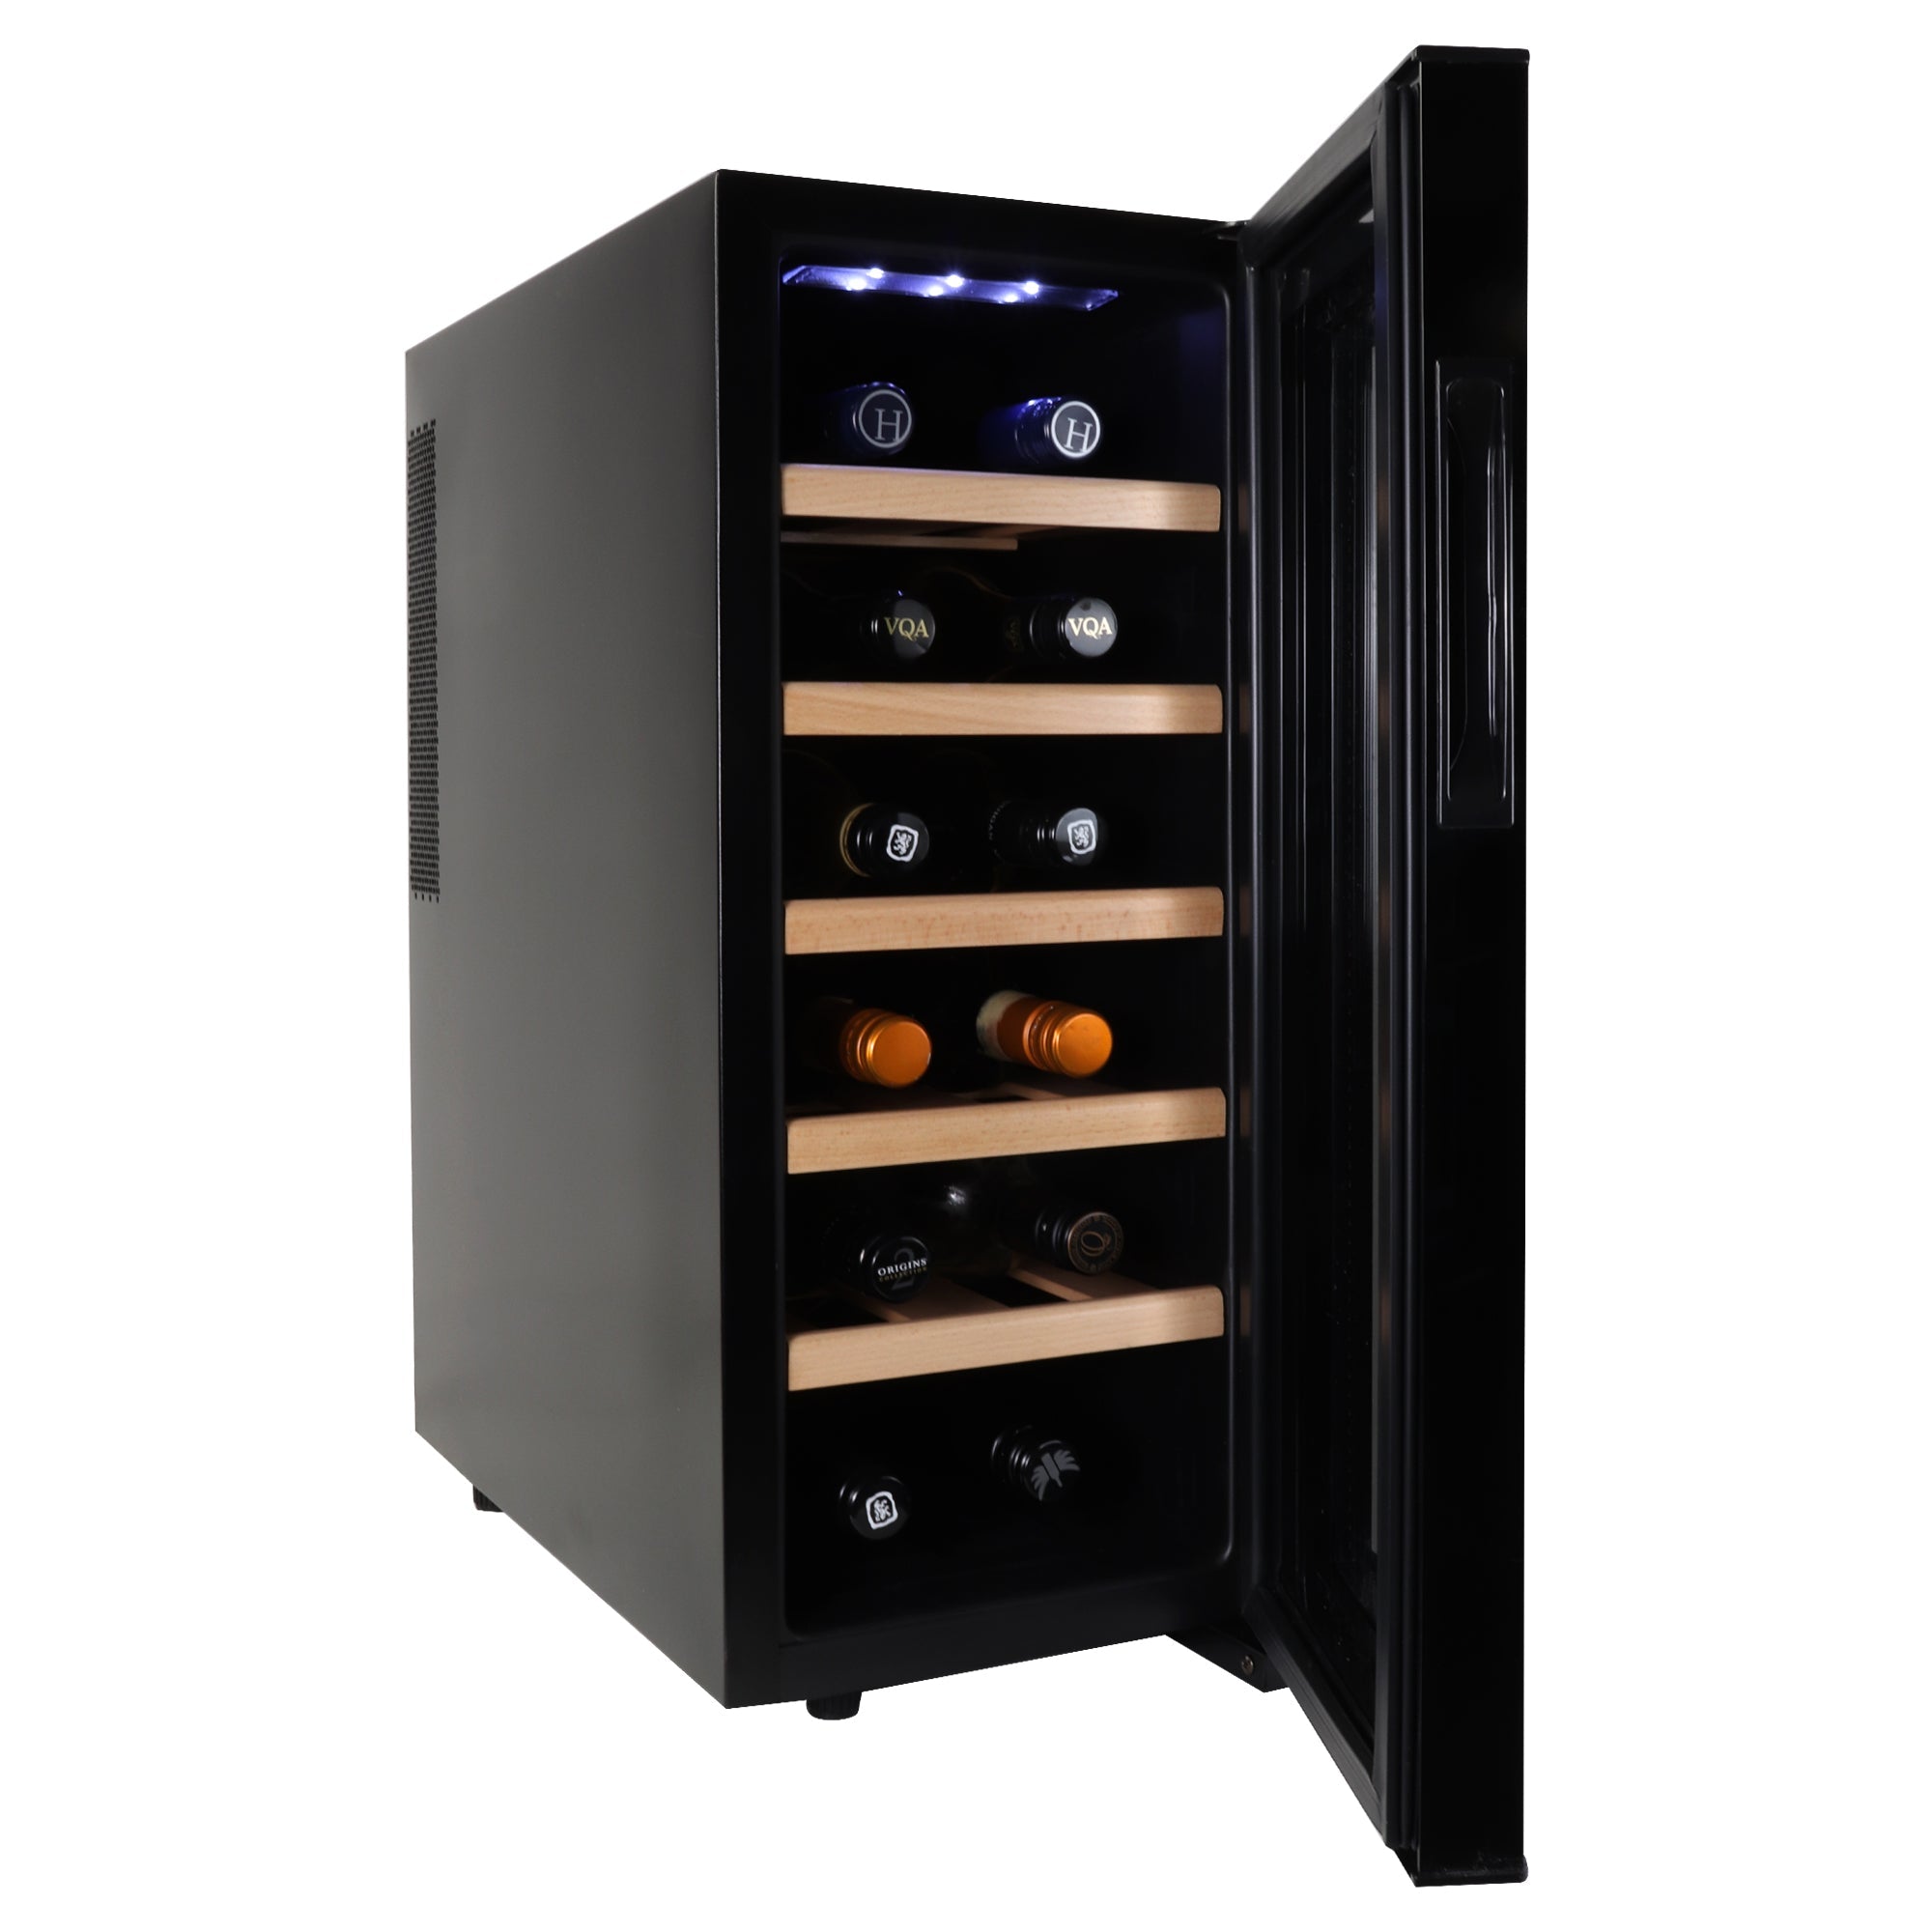 Koolatron 12 bottle wine cooler, open with bottles of wine inside, on a white background